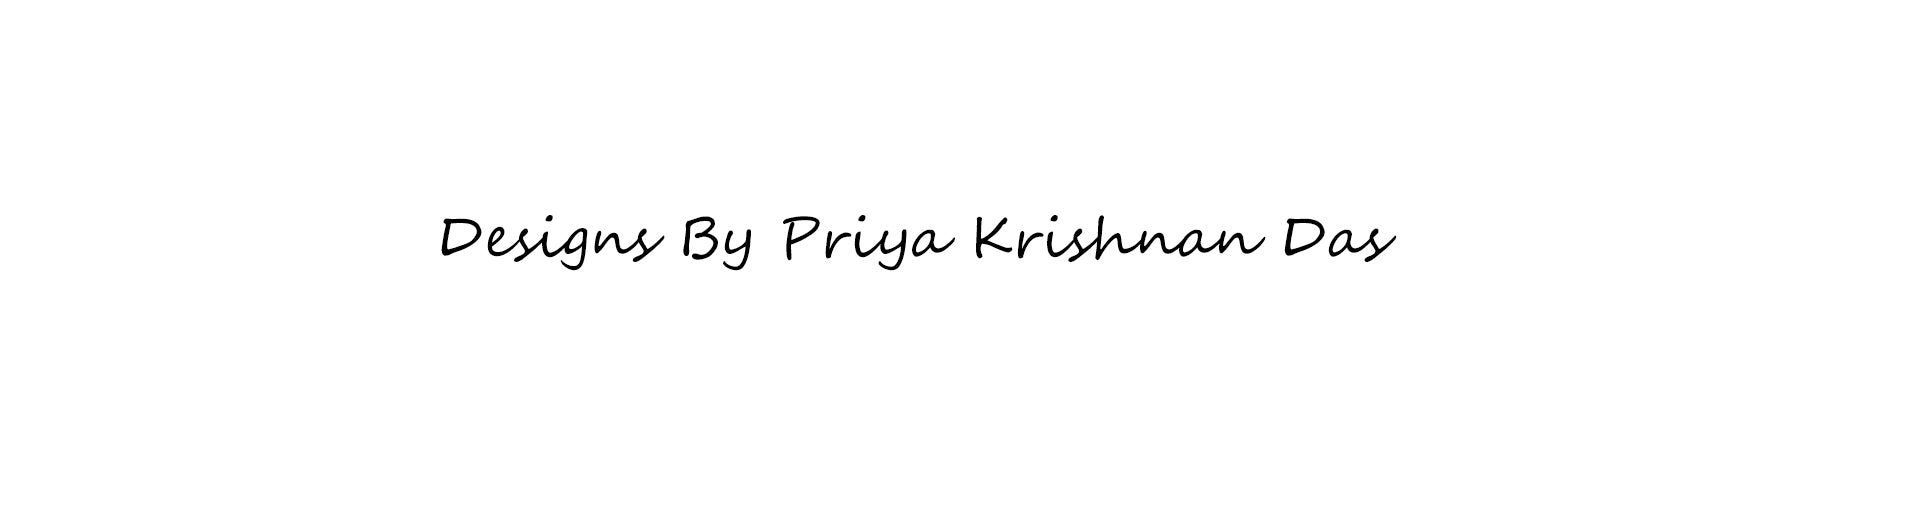 Priya Krishnan Das